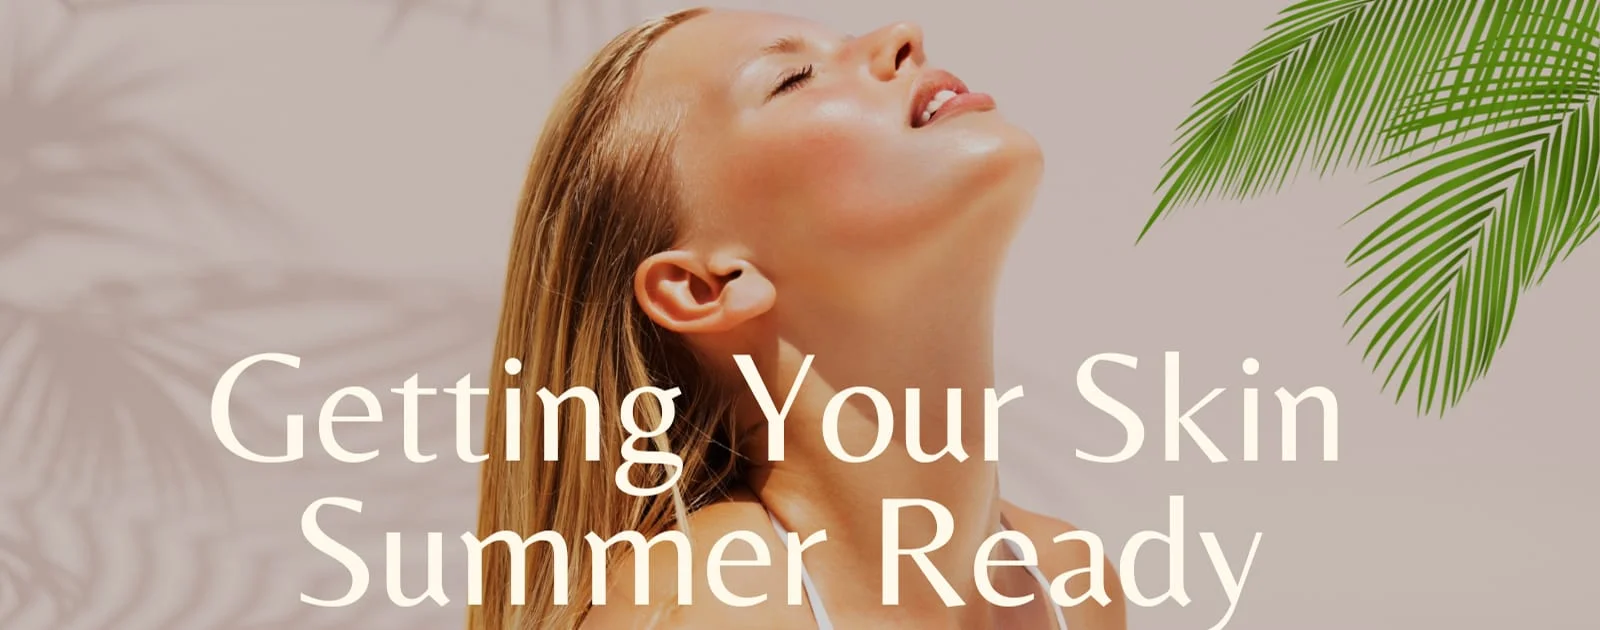 Summer Ready Skin Treatment | 3D LifeStyle